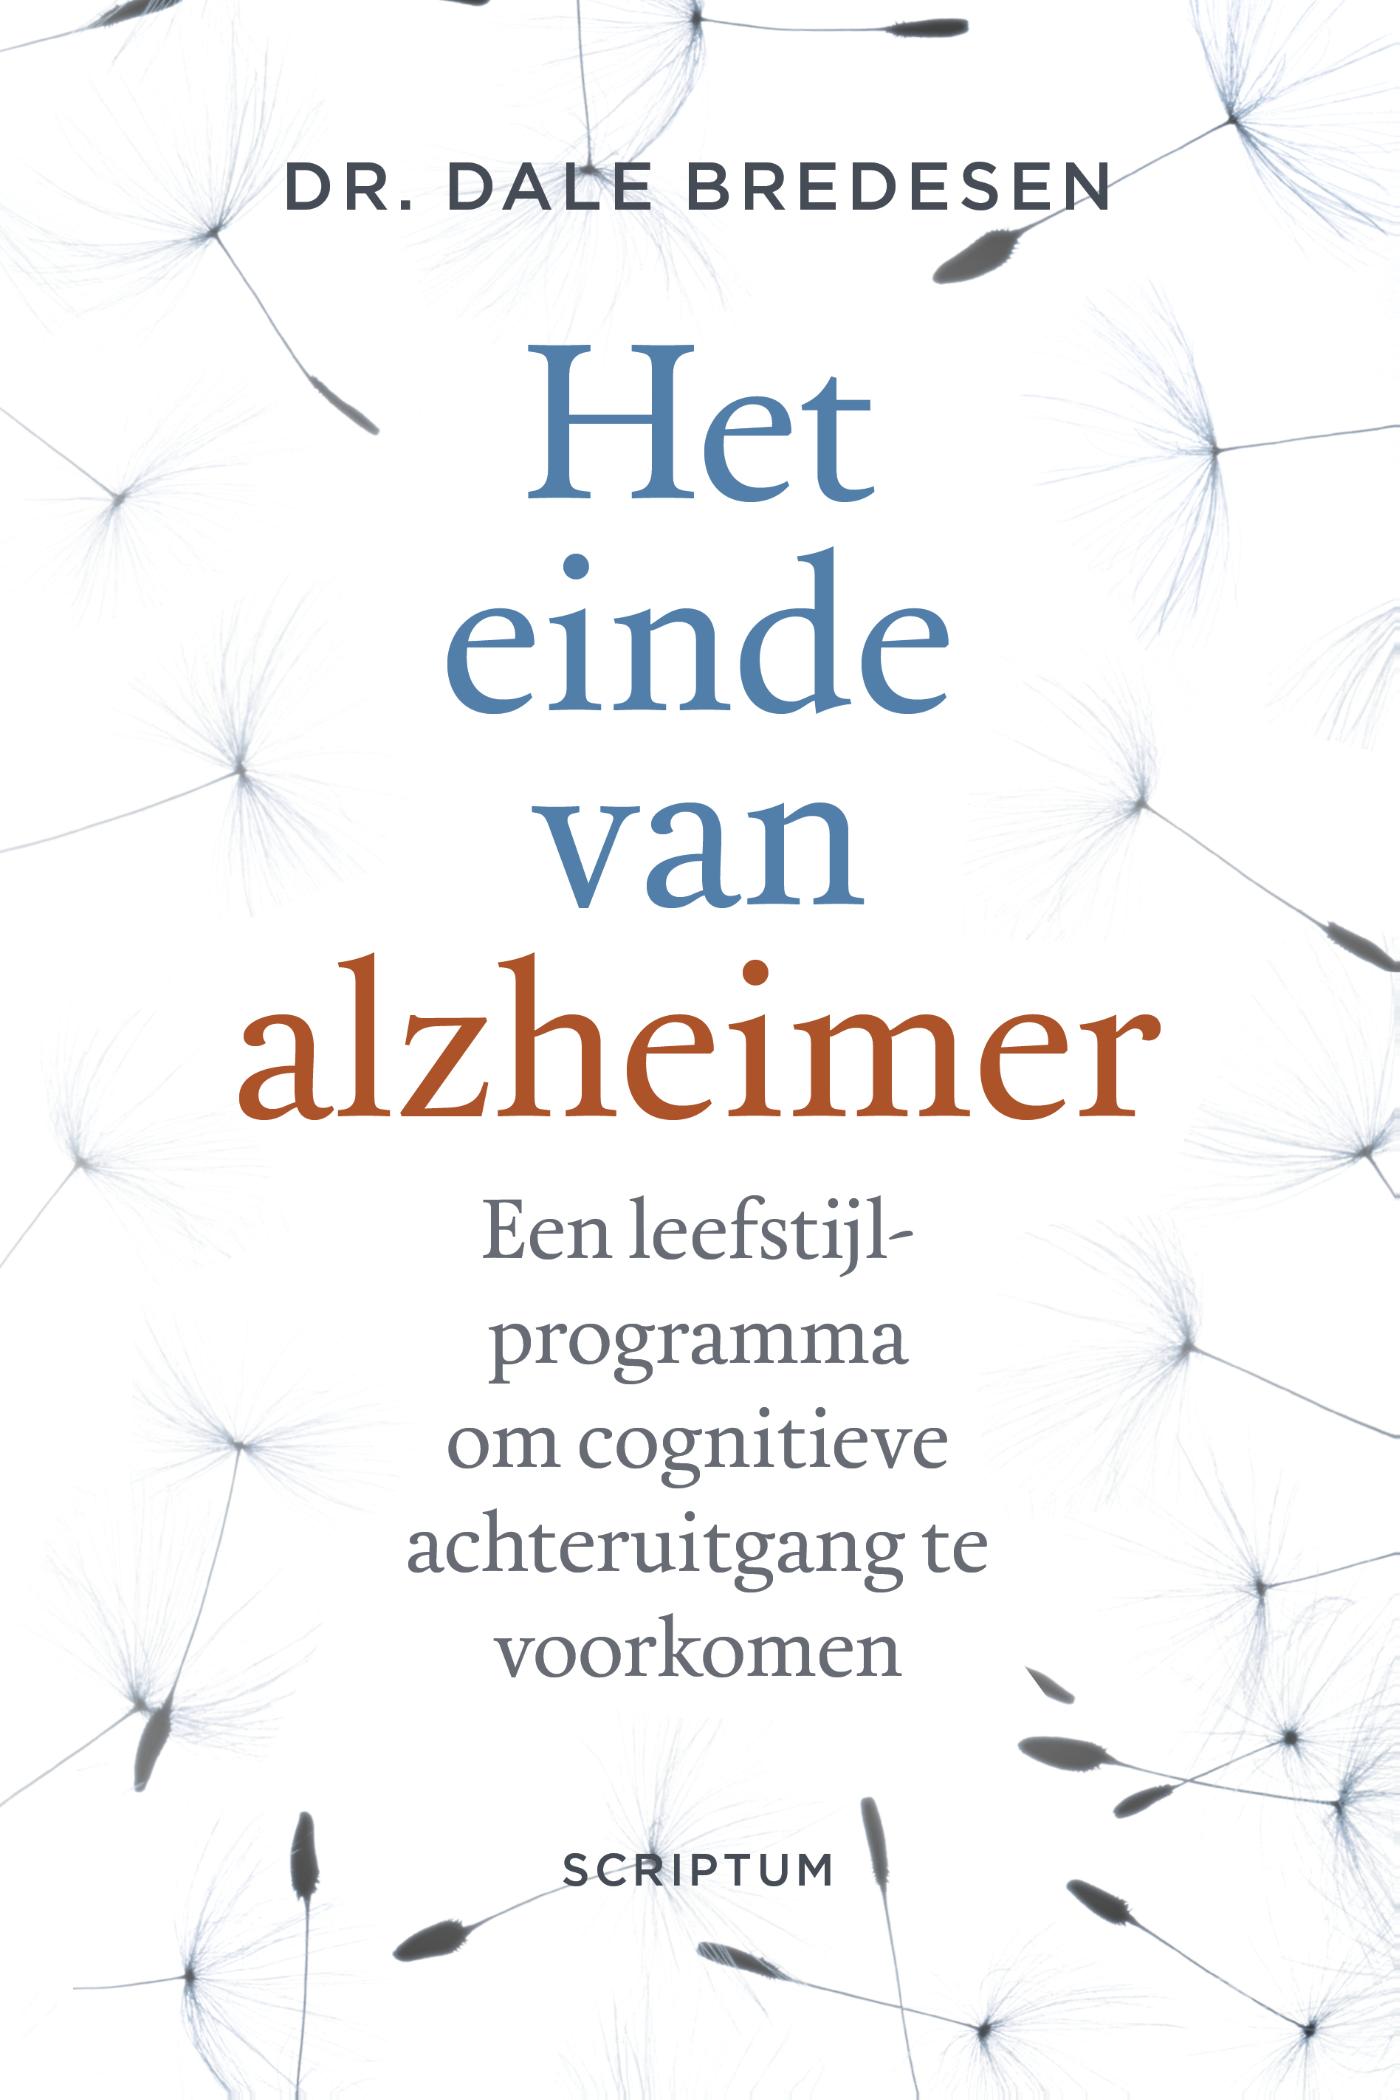 Het einde van alzheimer (Ebook)